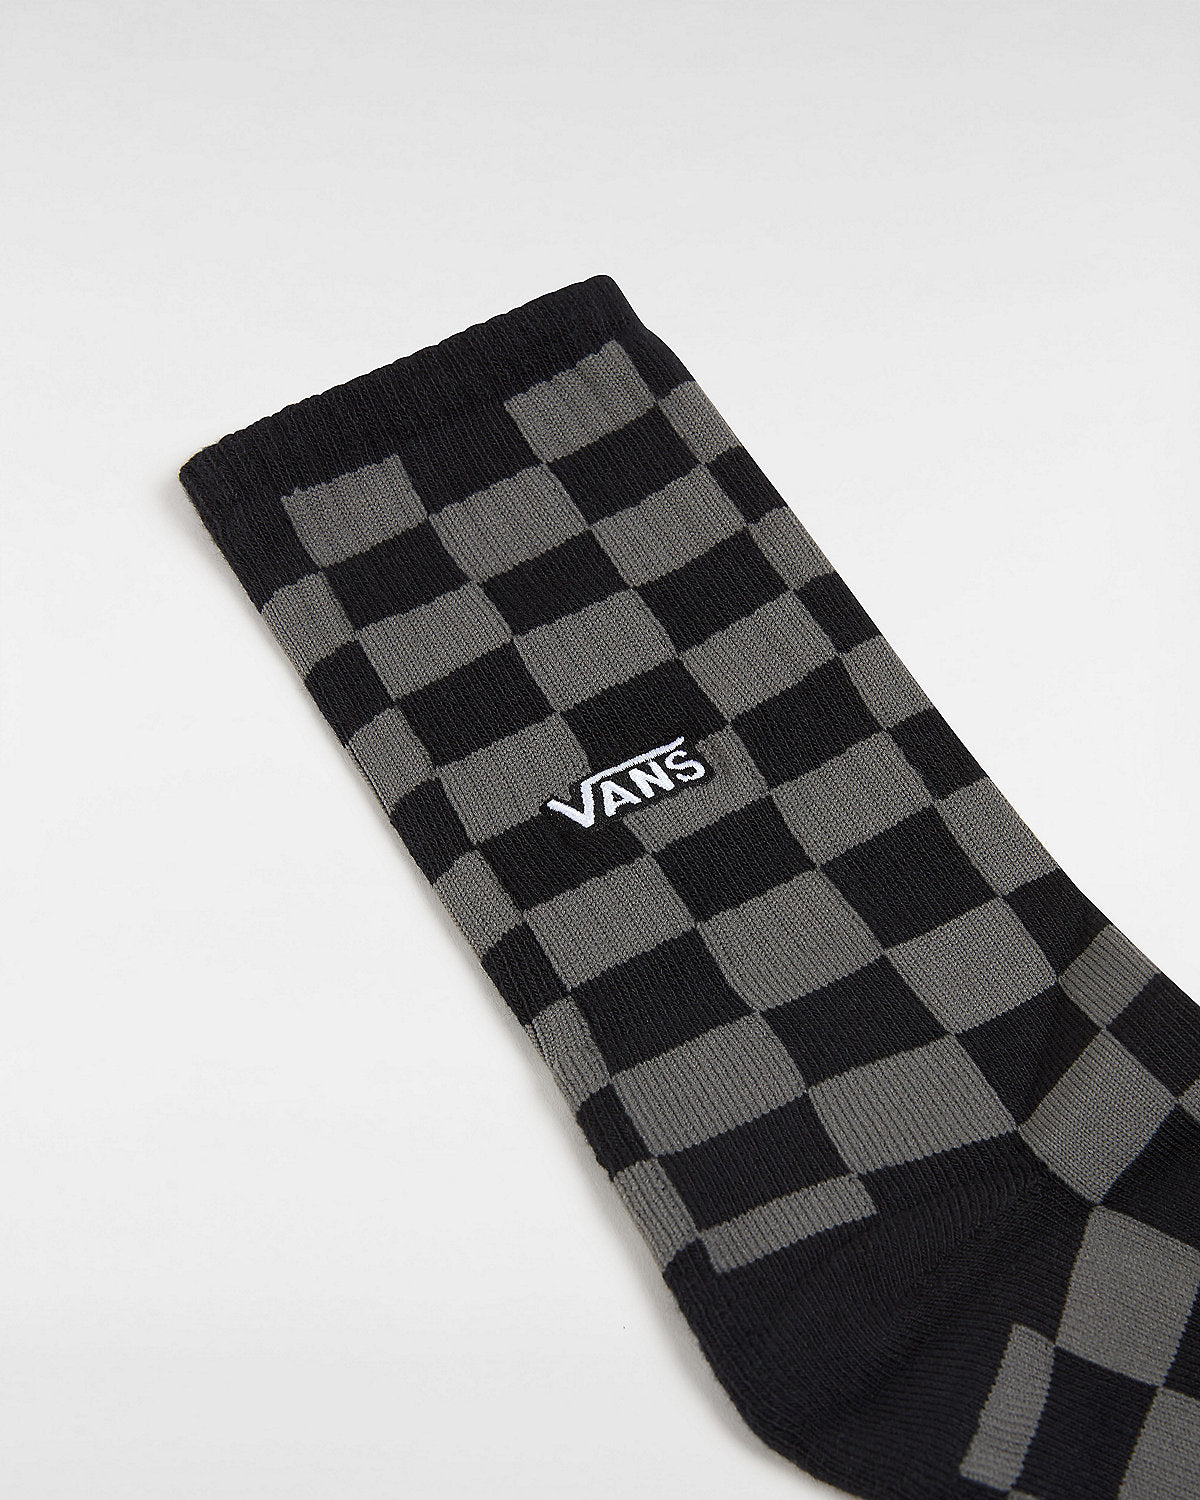 VANS Mens Checkerboard Crew Socks (1 Pair) - Black / Charcoal